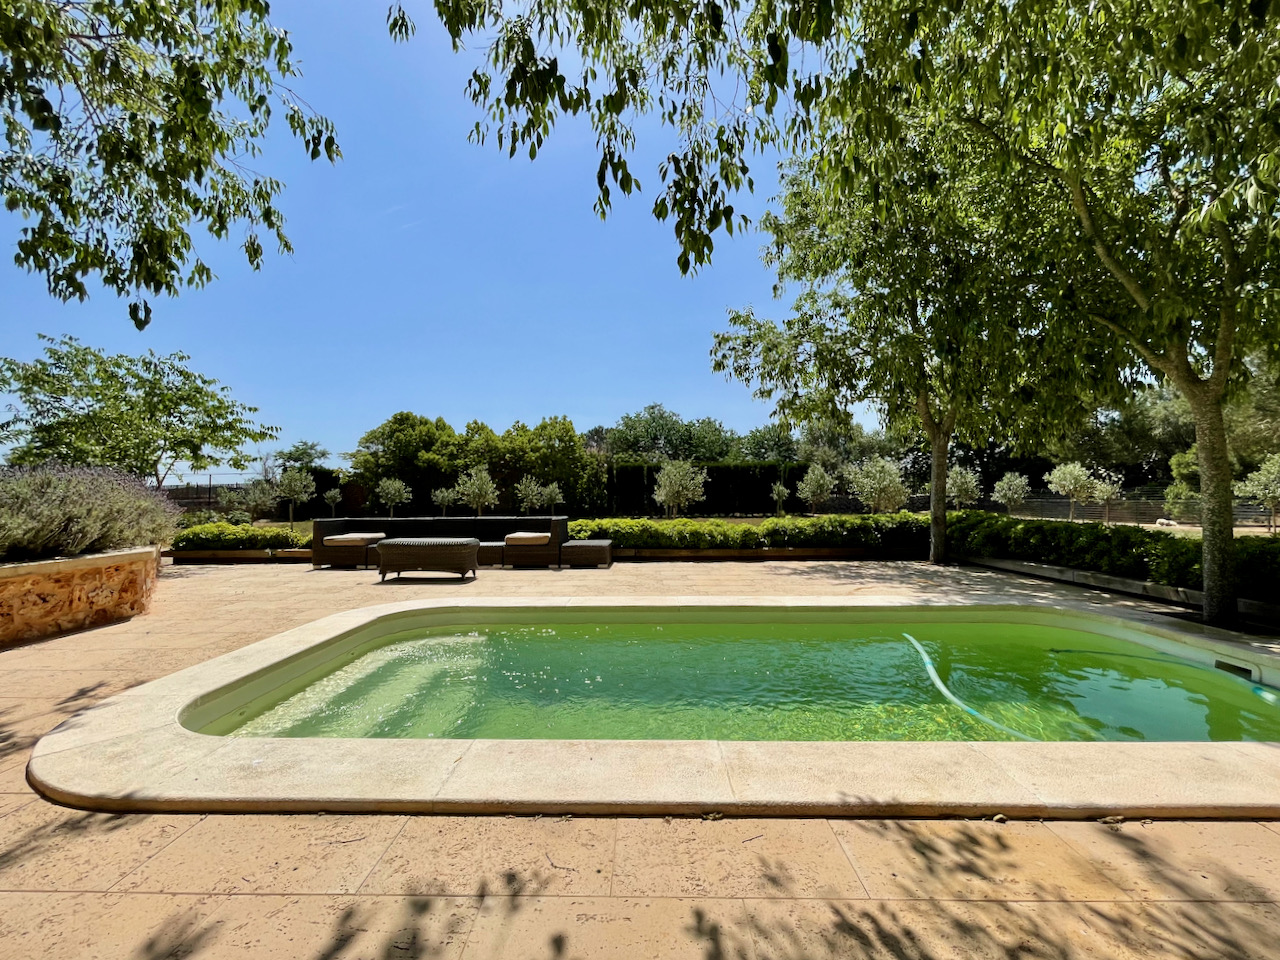 Fantastische rustikale Finca mit Schwimmbad in Sencelles, Mallorca.